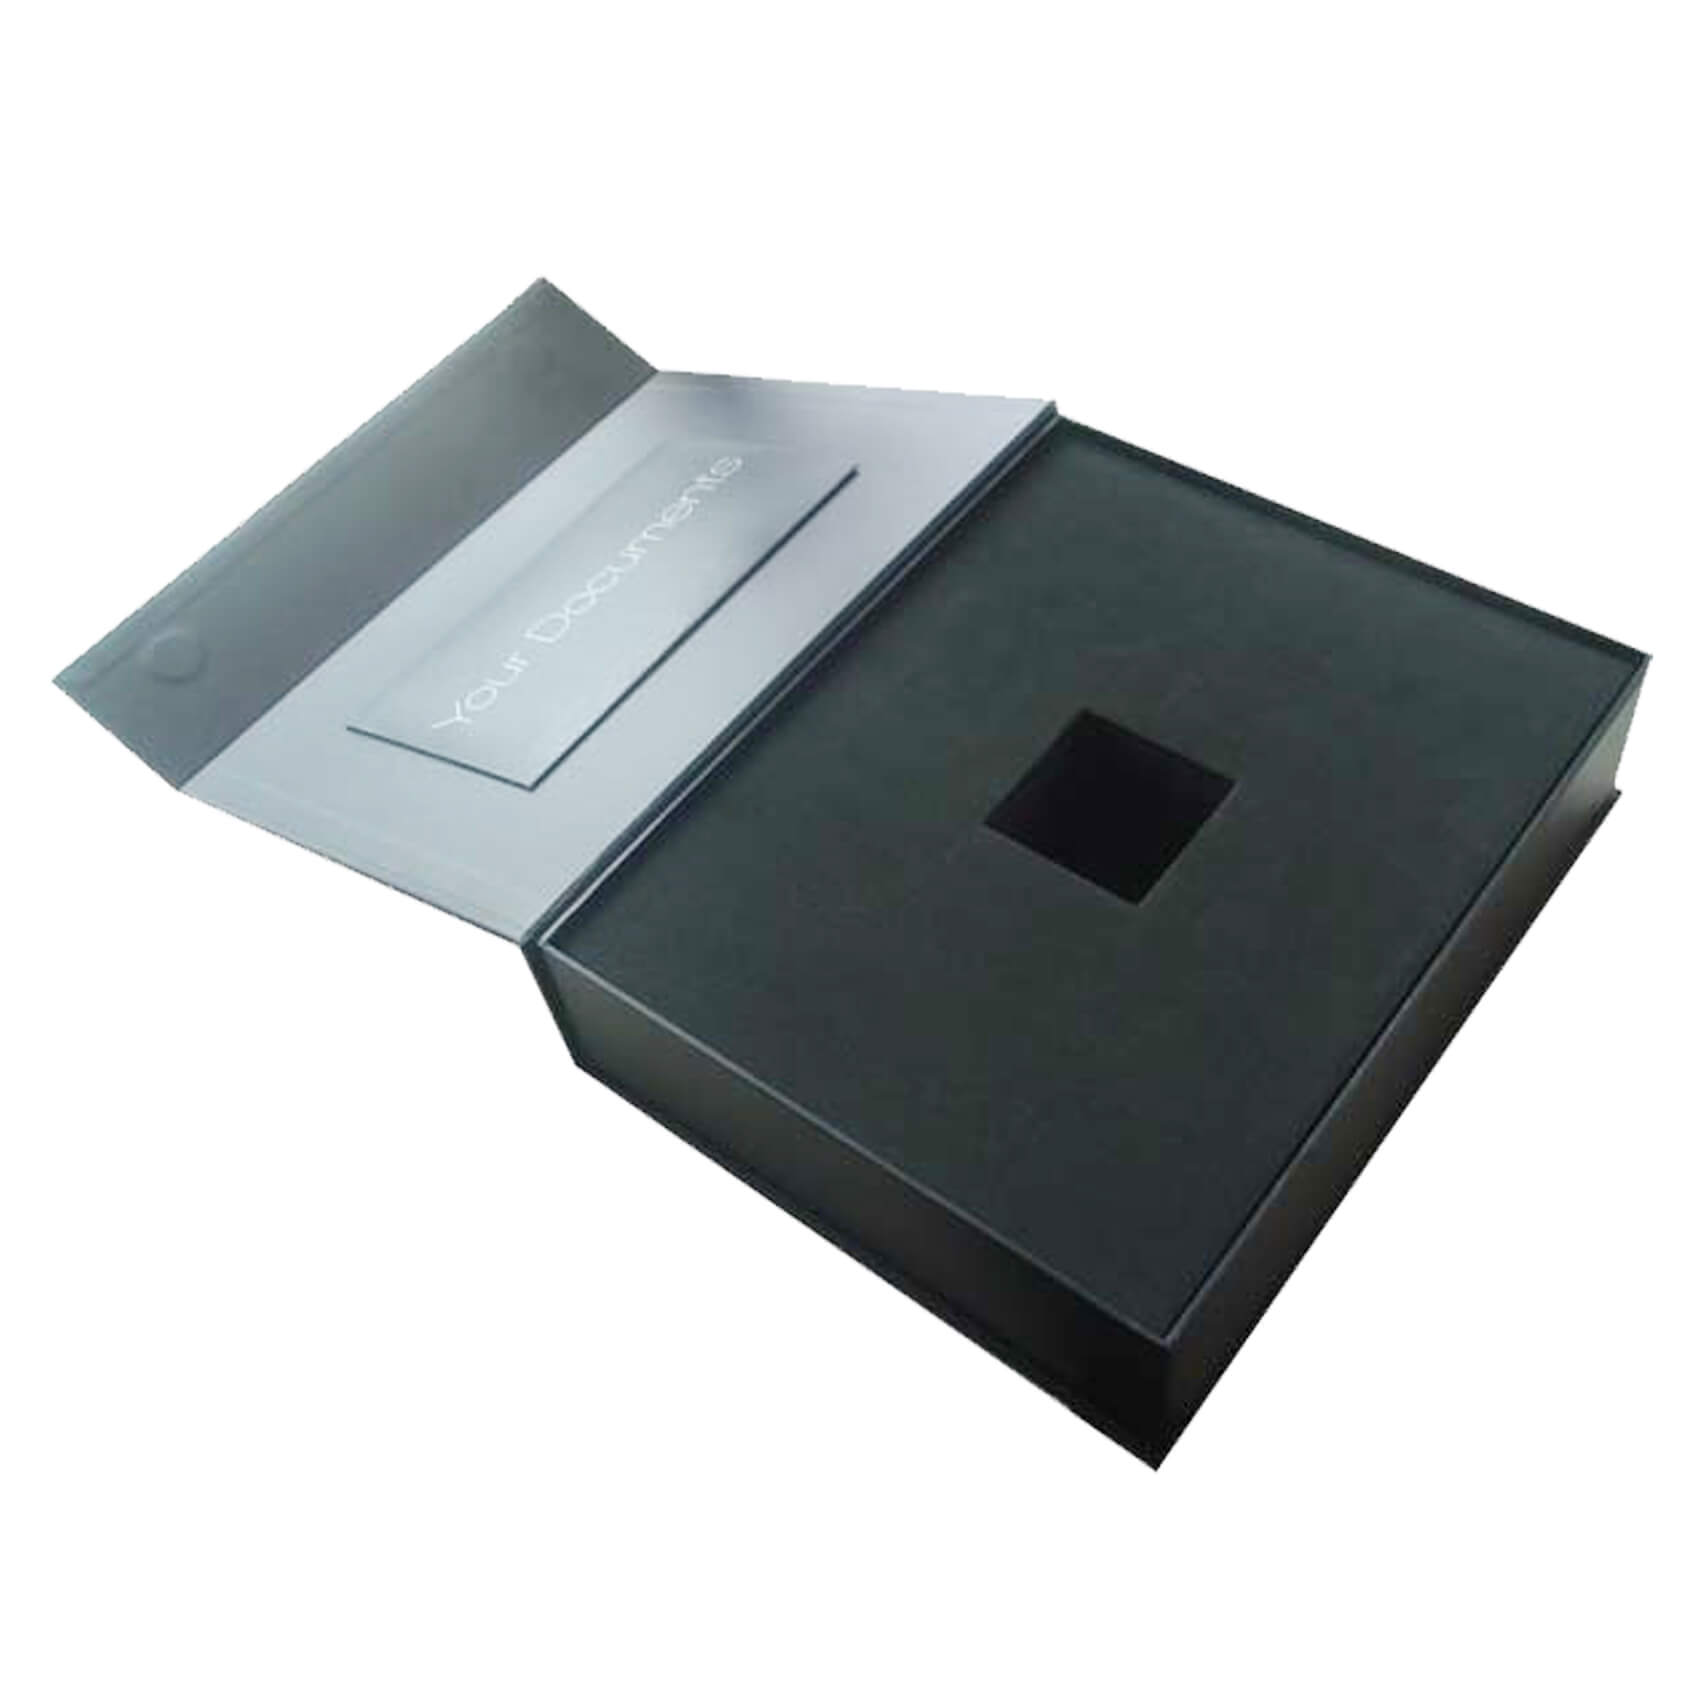 Large Black Book Shaped Gift Box